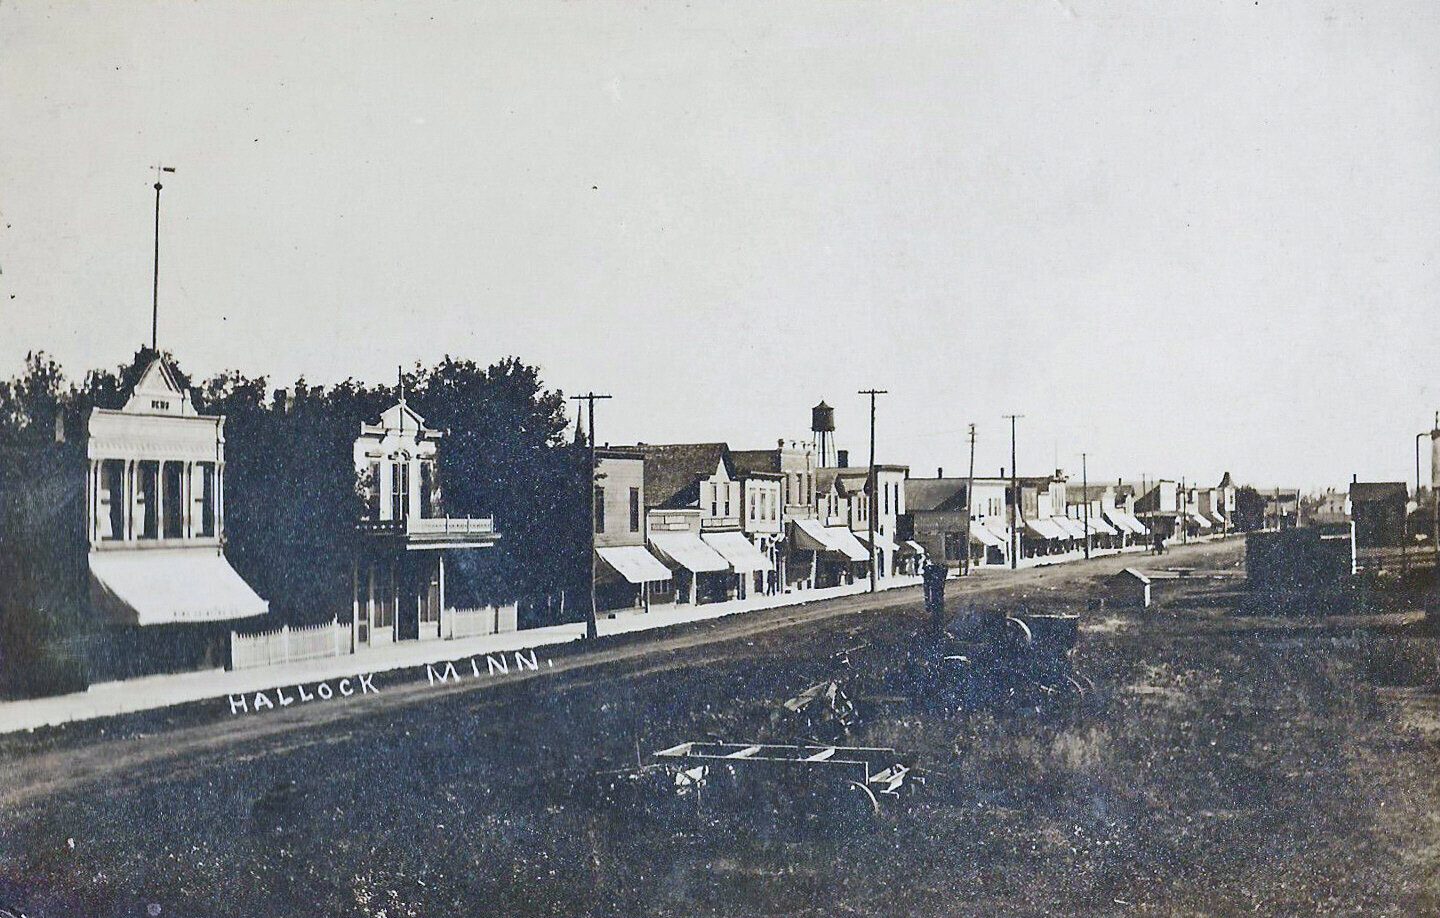  Main Street, Hallock, Minnesota in 1911. Courtesy of  LakesnWoods.com ’s postcard collection. 